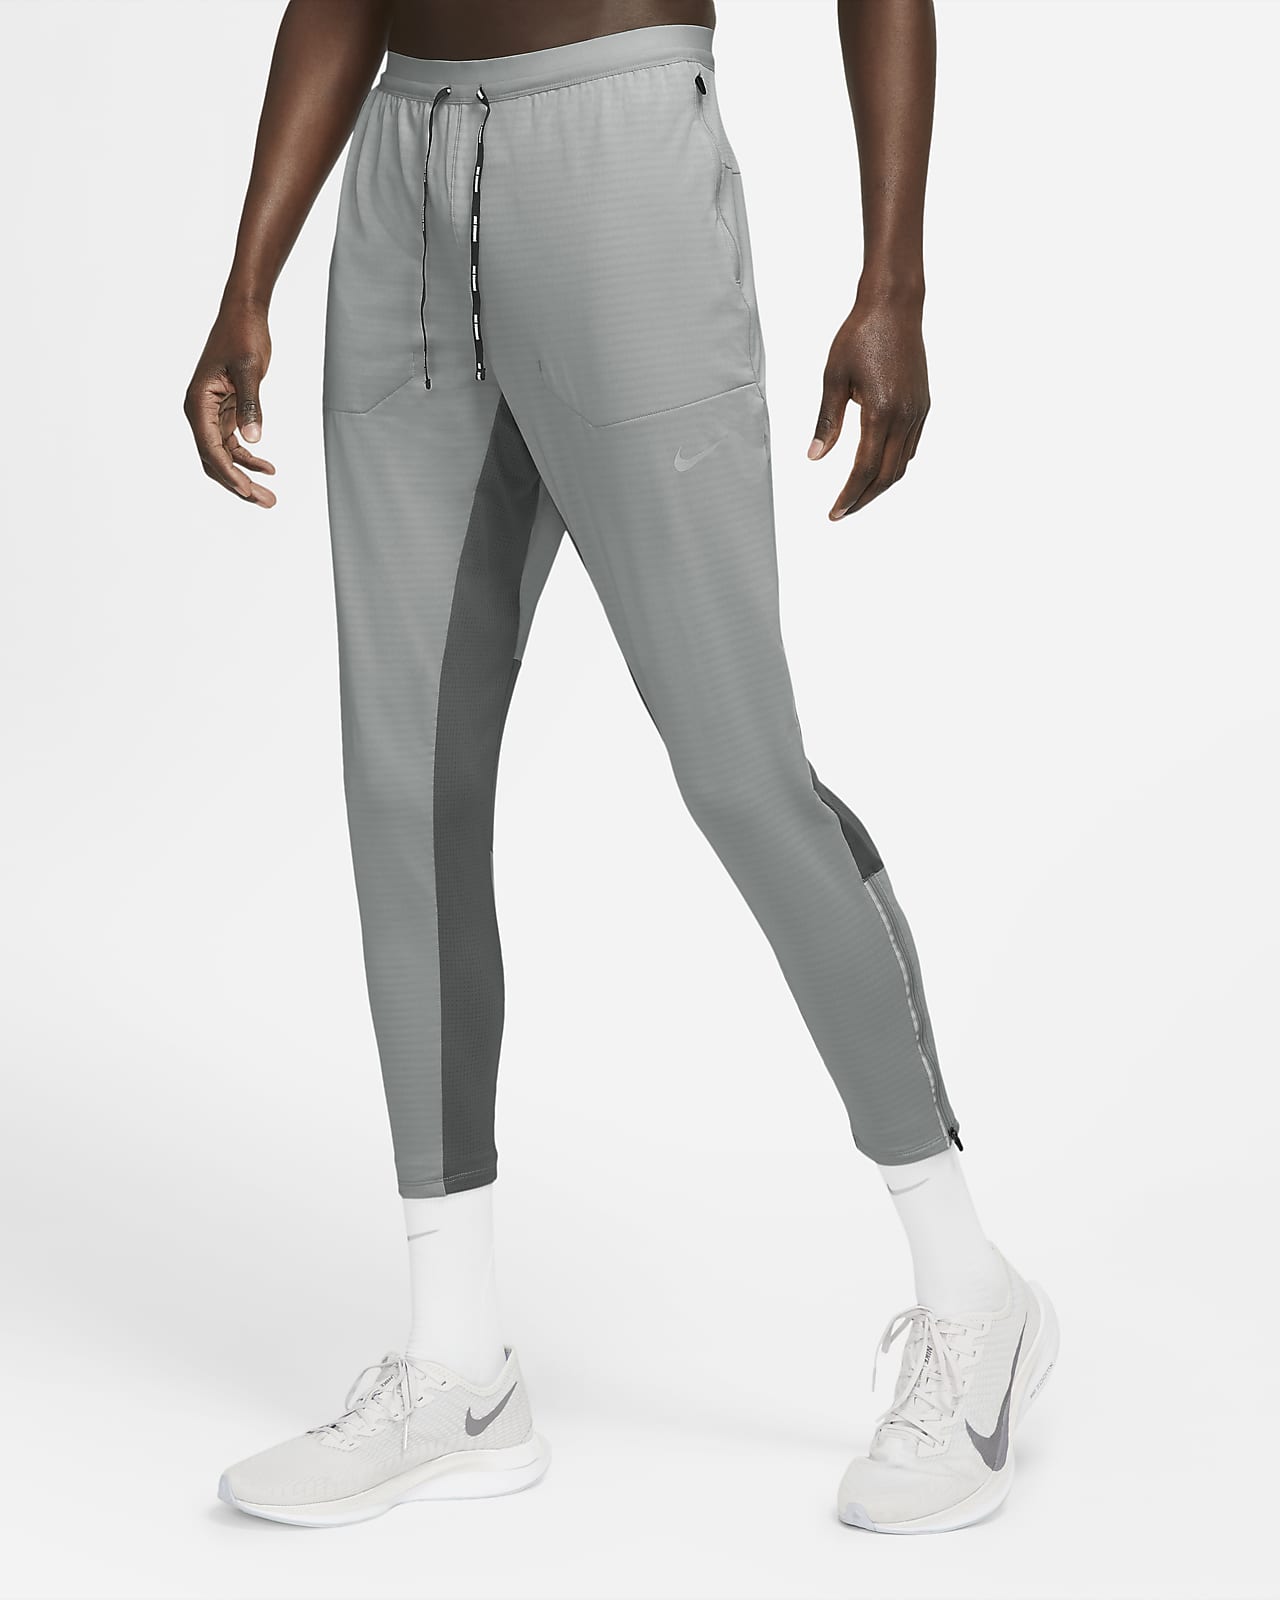 Pants tejidos de running para hombre Nike Phenom Elite